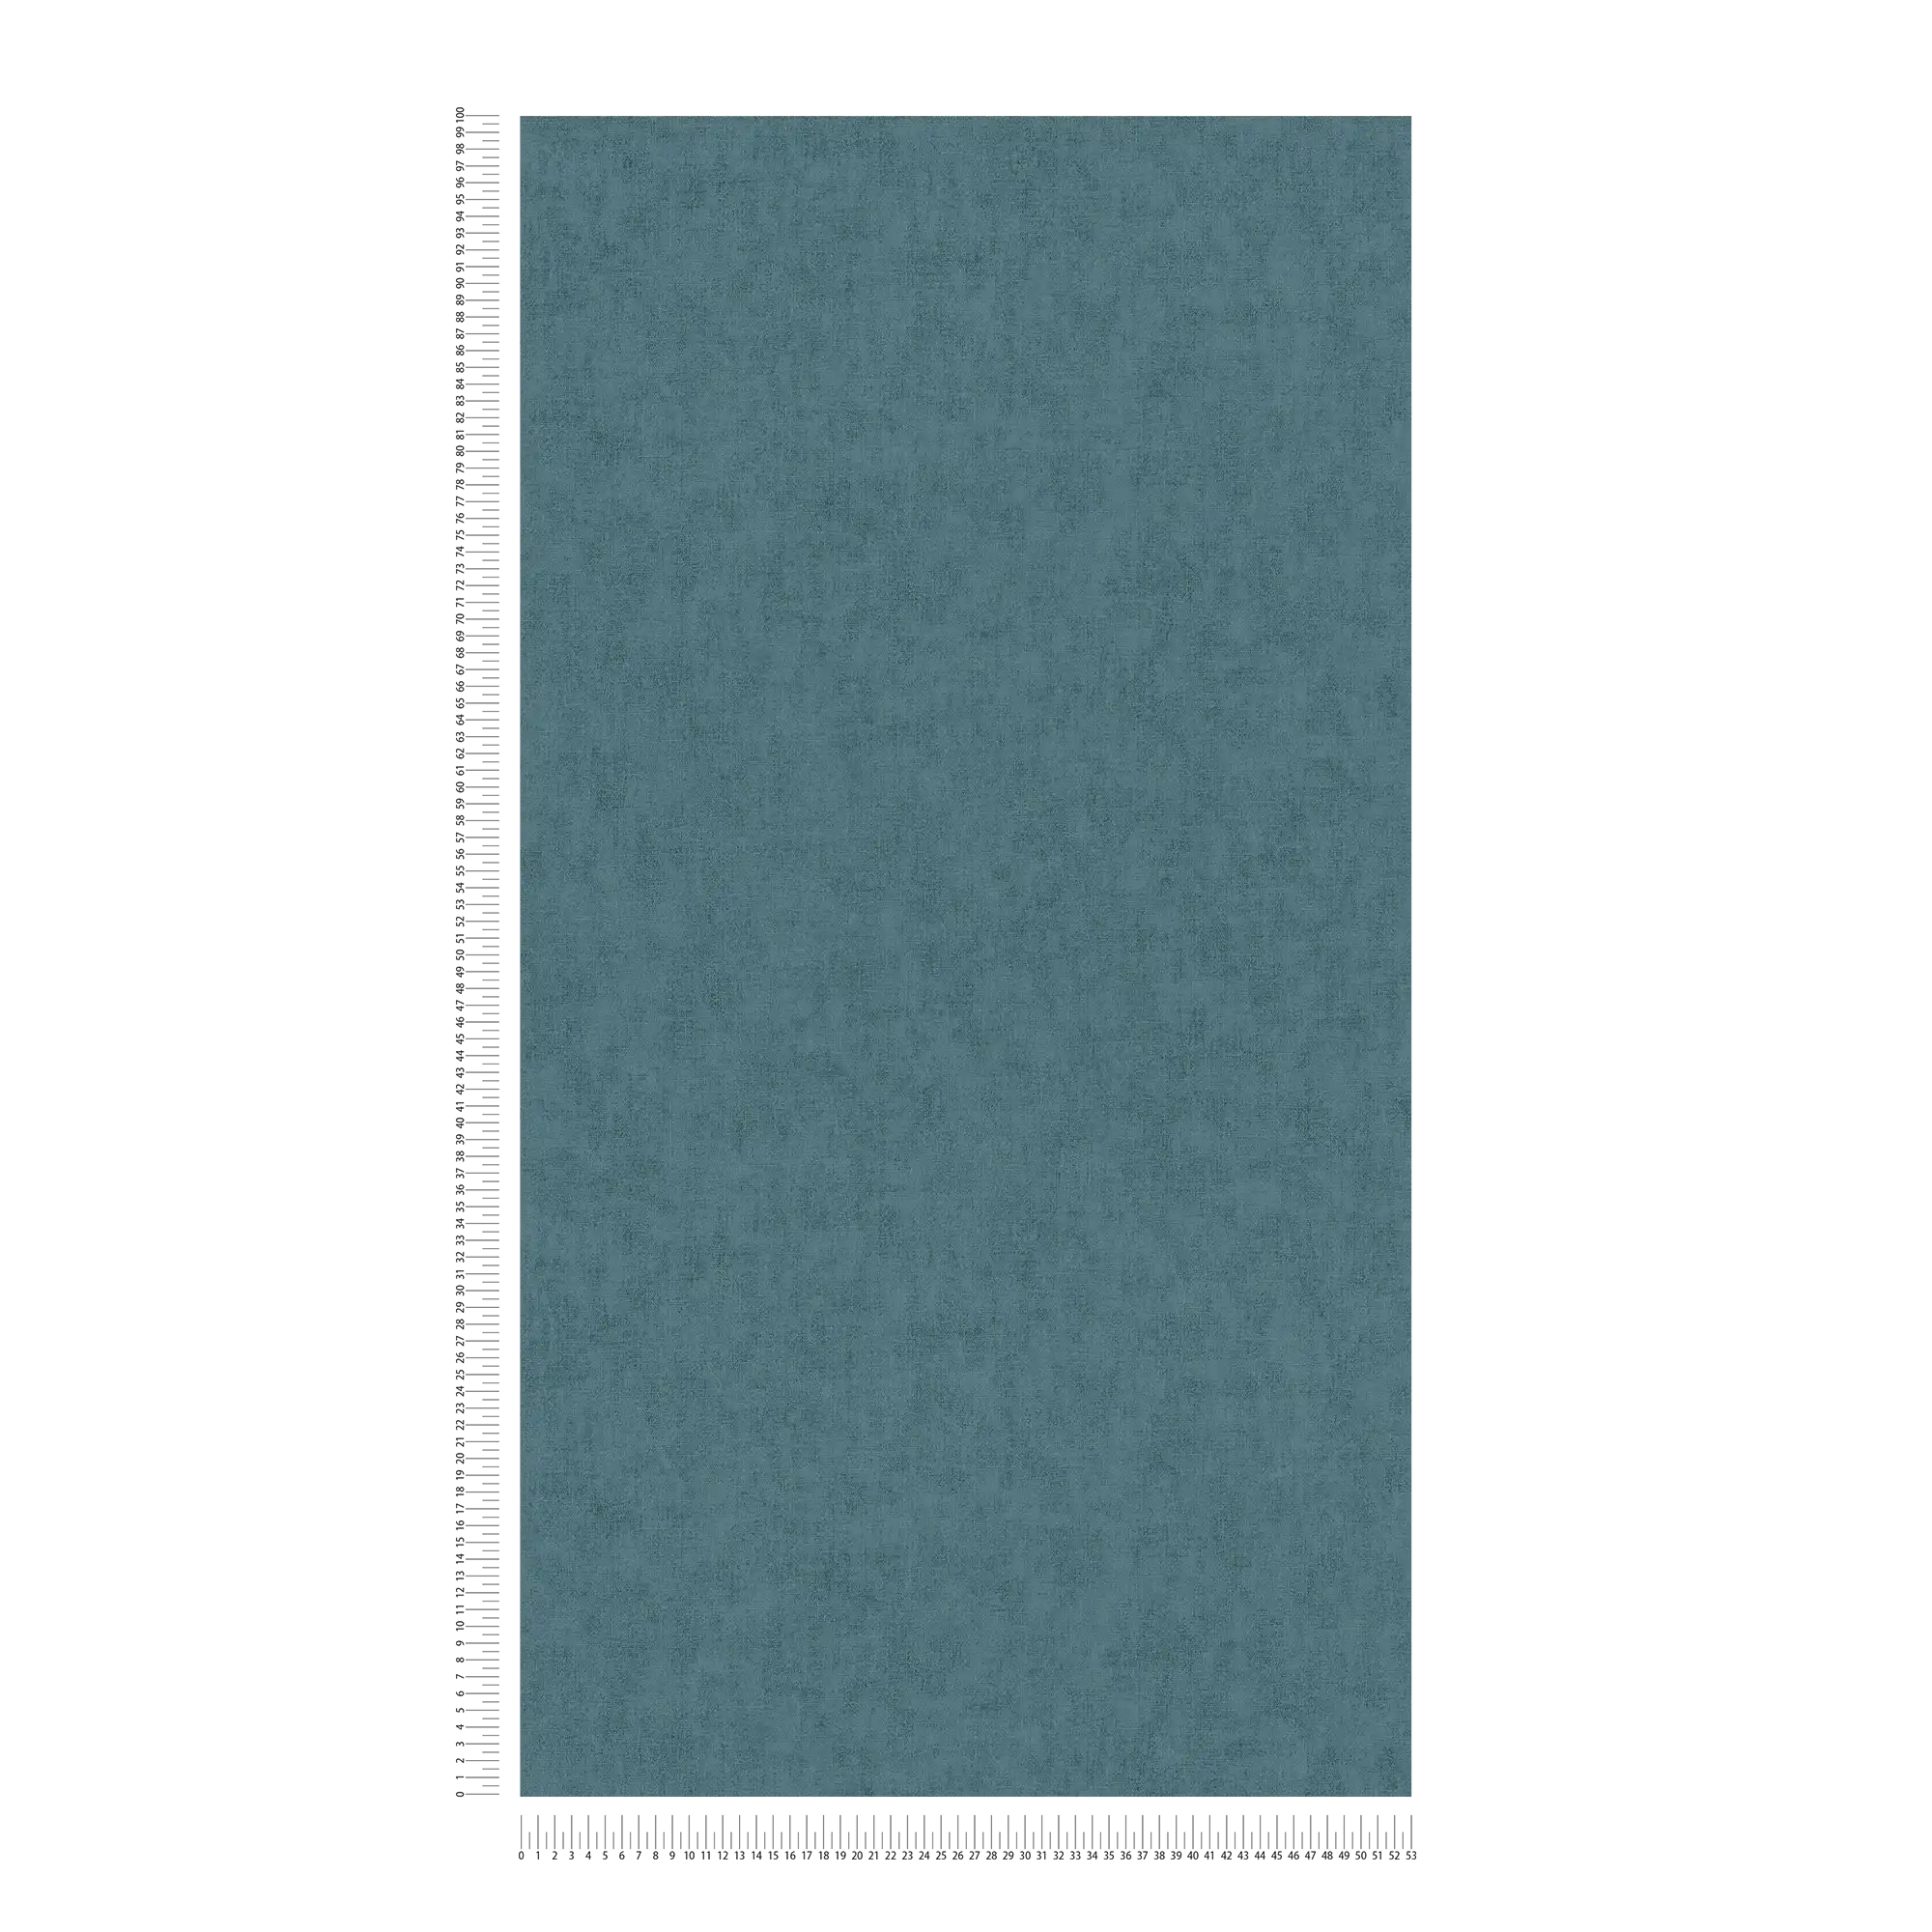             Vliestapete Textil-Optik im Scandinavian Stil - Blau, Grau
        